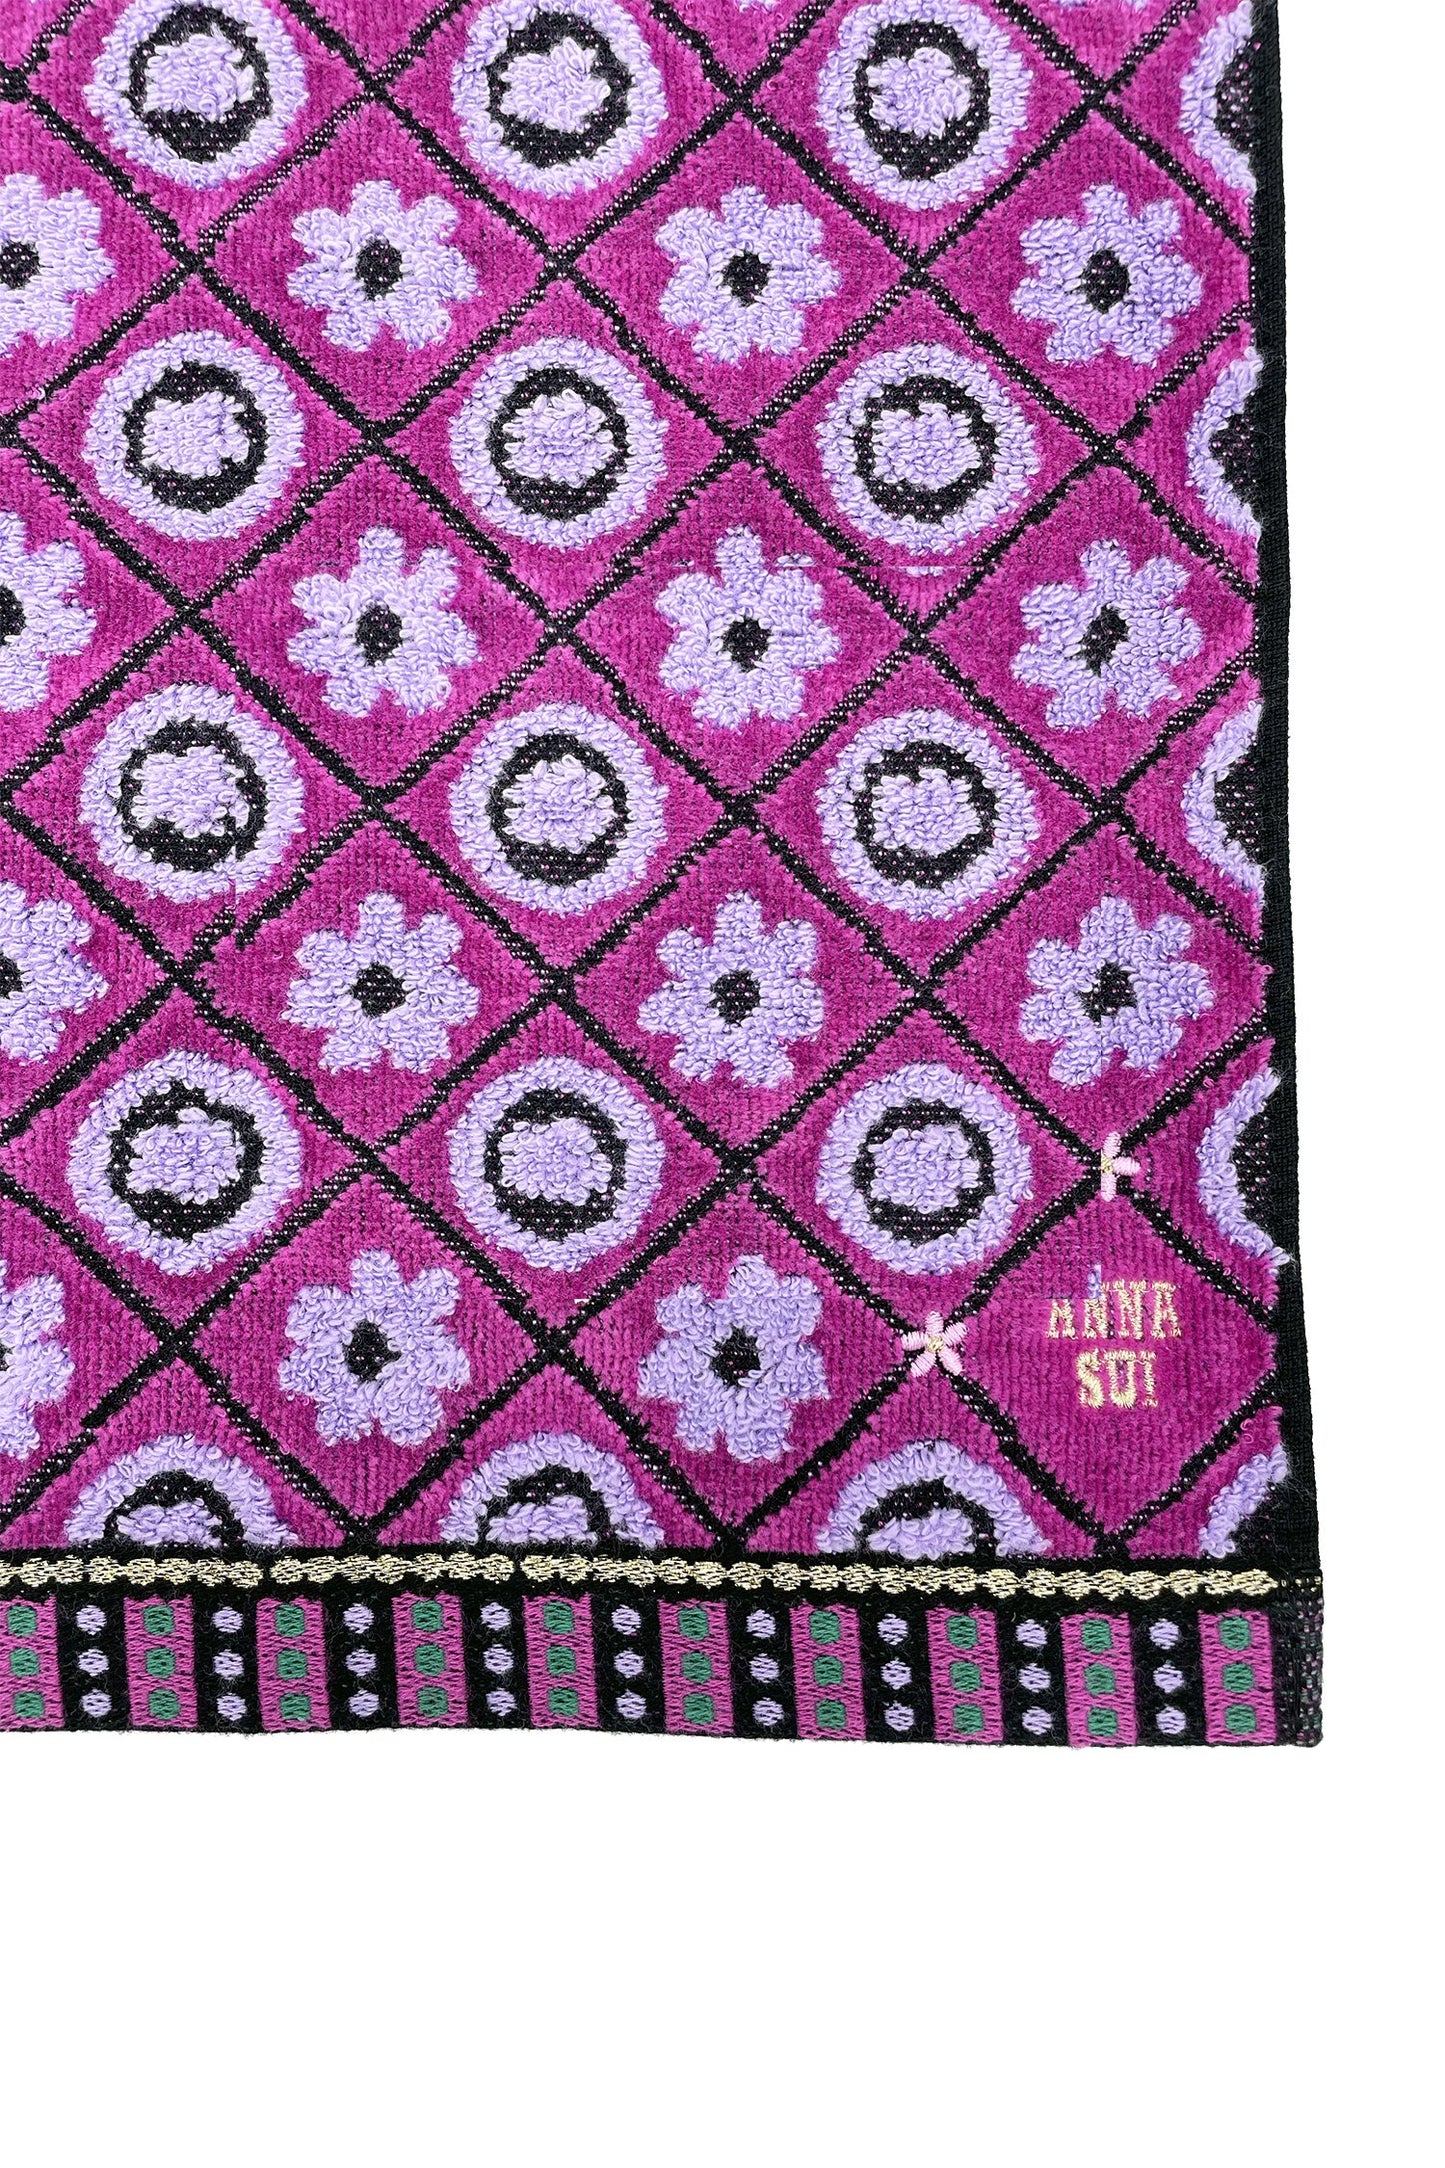 Floral Lattice Washcloth purple print Floral design, black lines on diamonds borders, Anna Sui's label